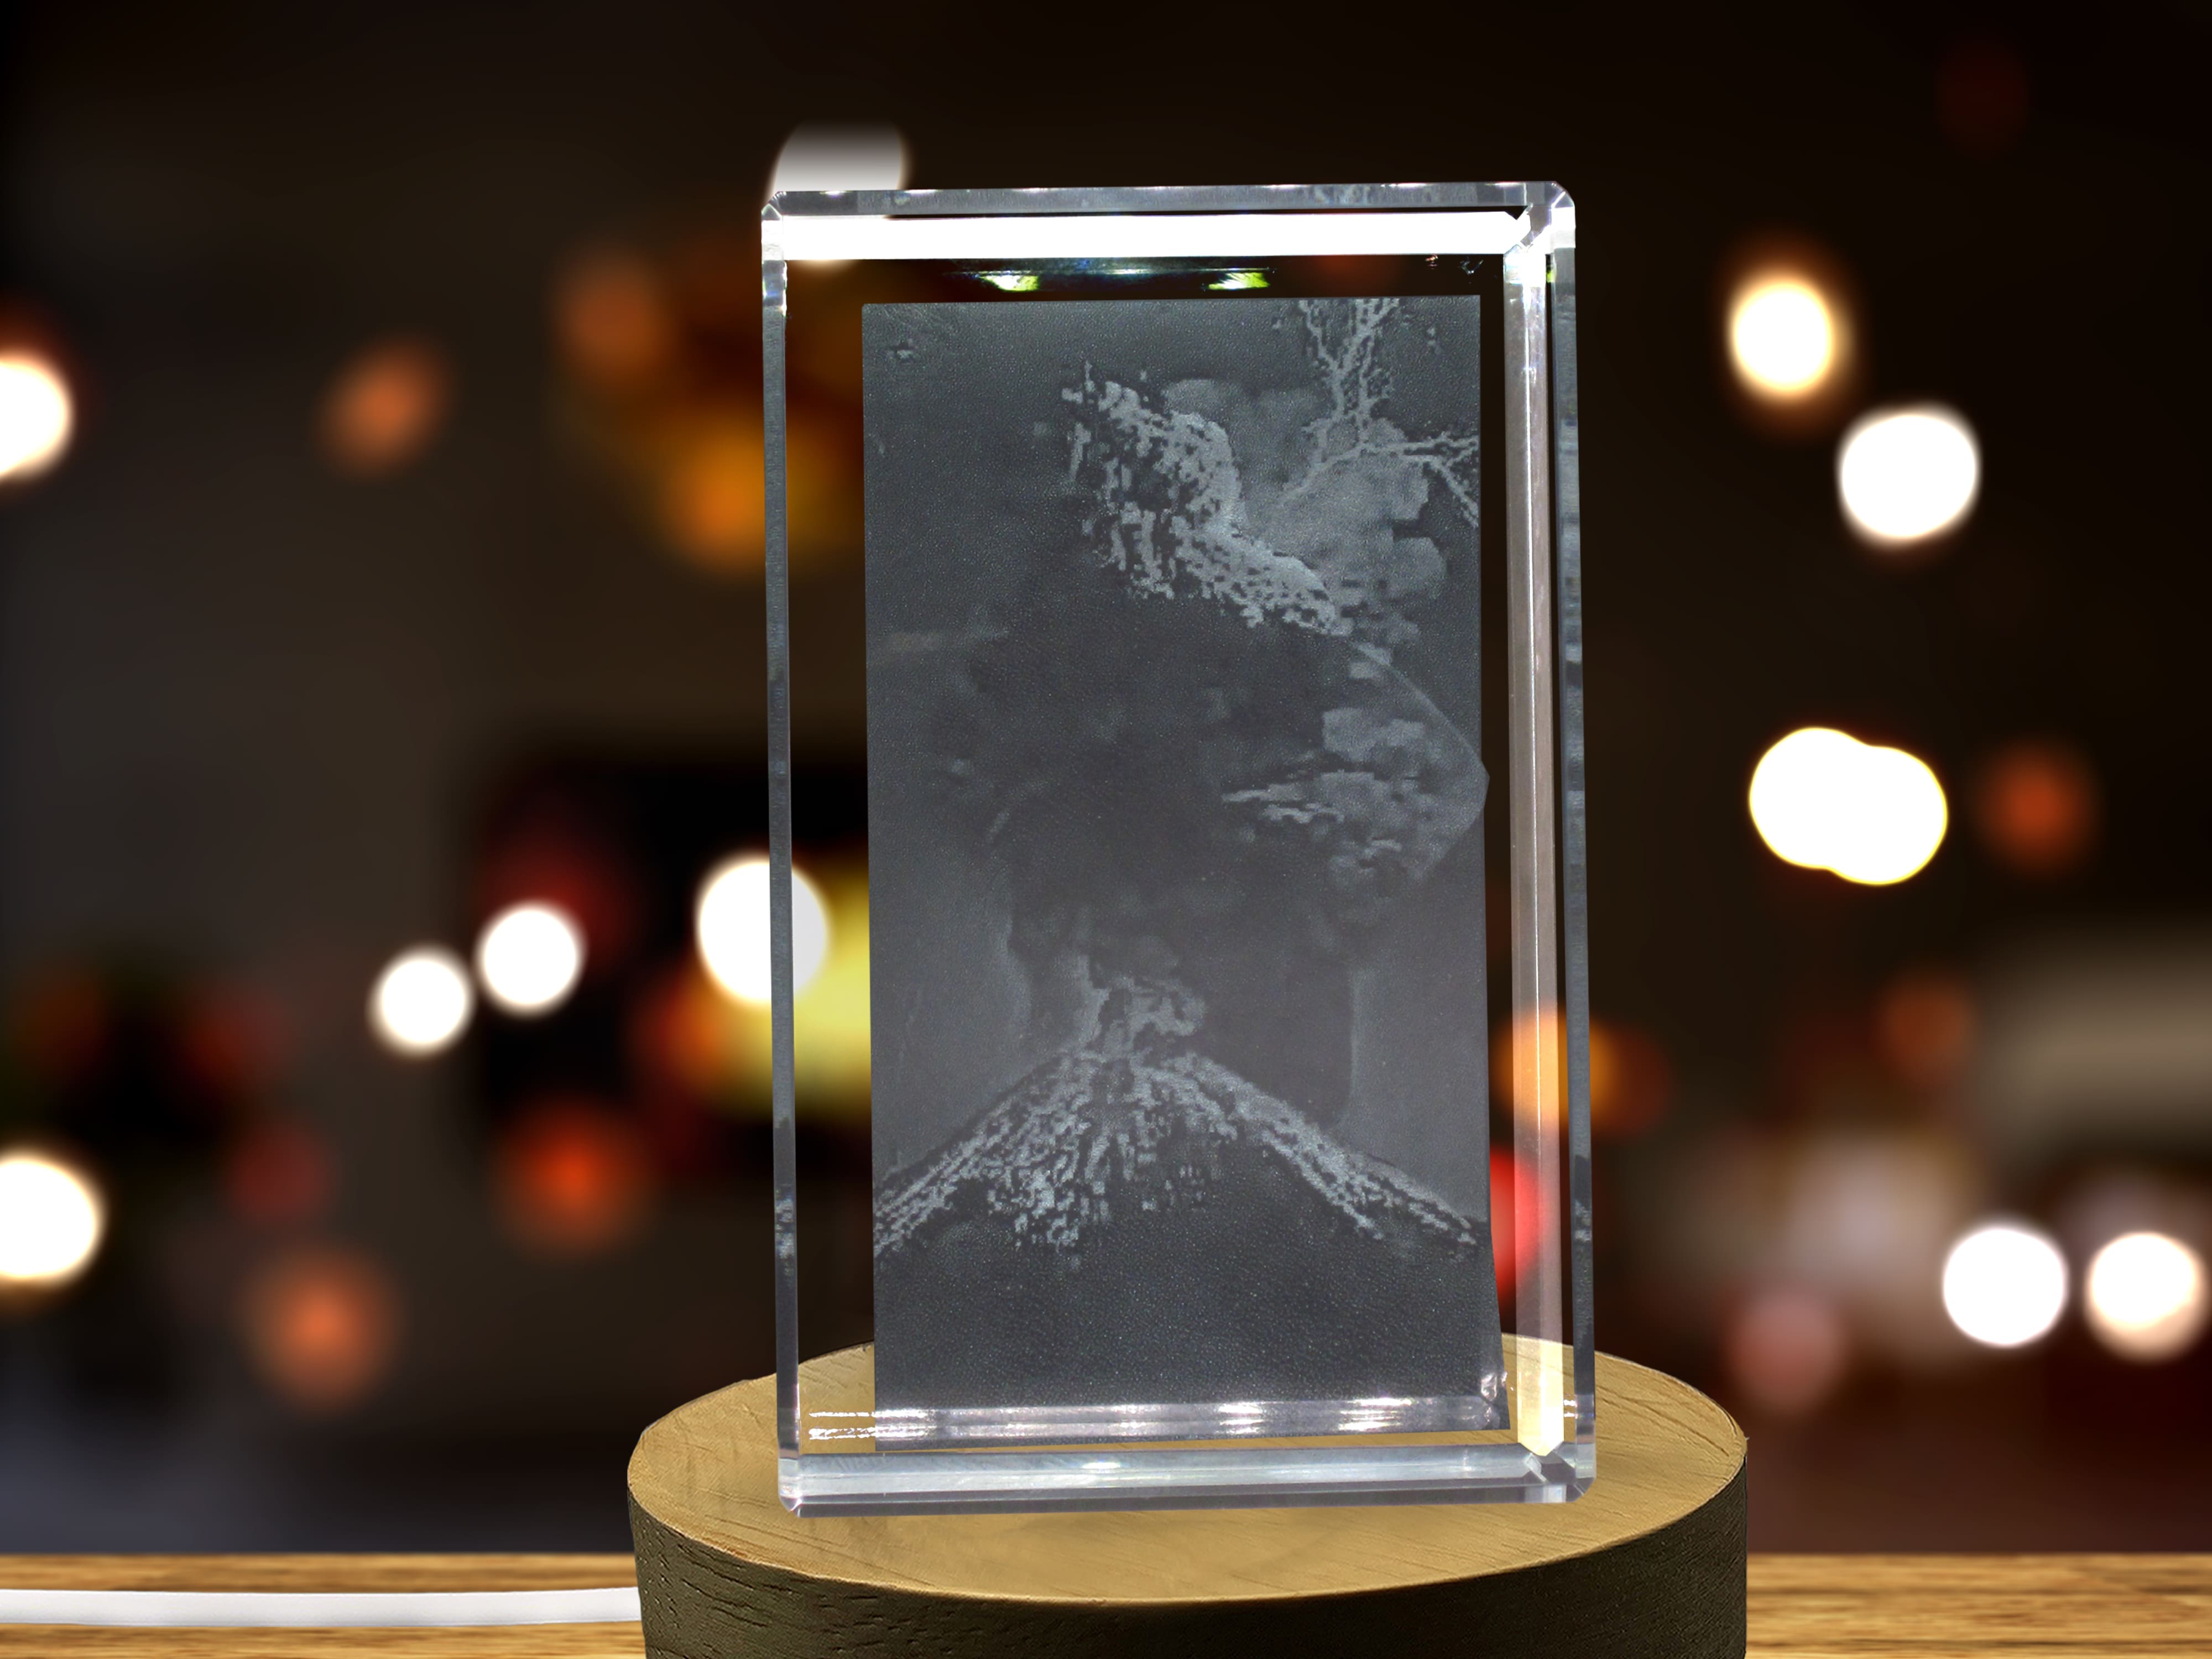 Volcano 3D Engraved Crystal 3D Engraved Crystal Keepsake/Gift/Decor/Collectible/Souvenir A&B Crystal Collection